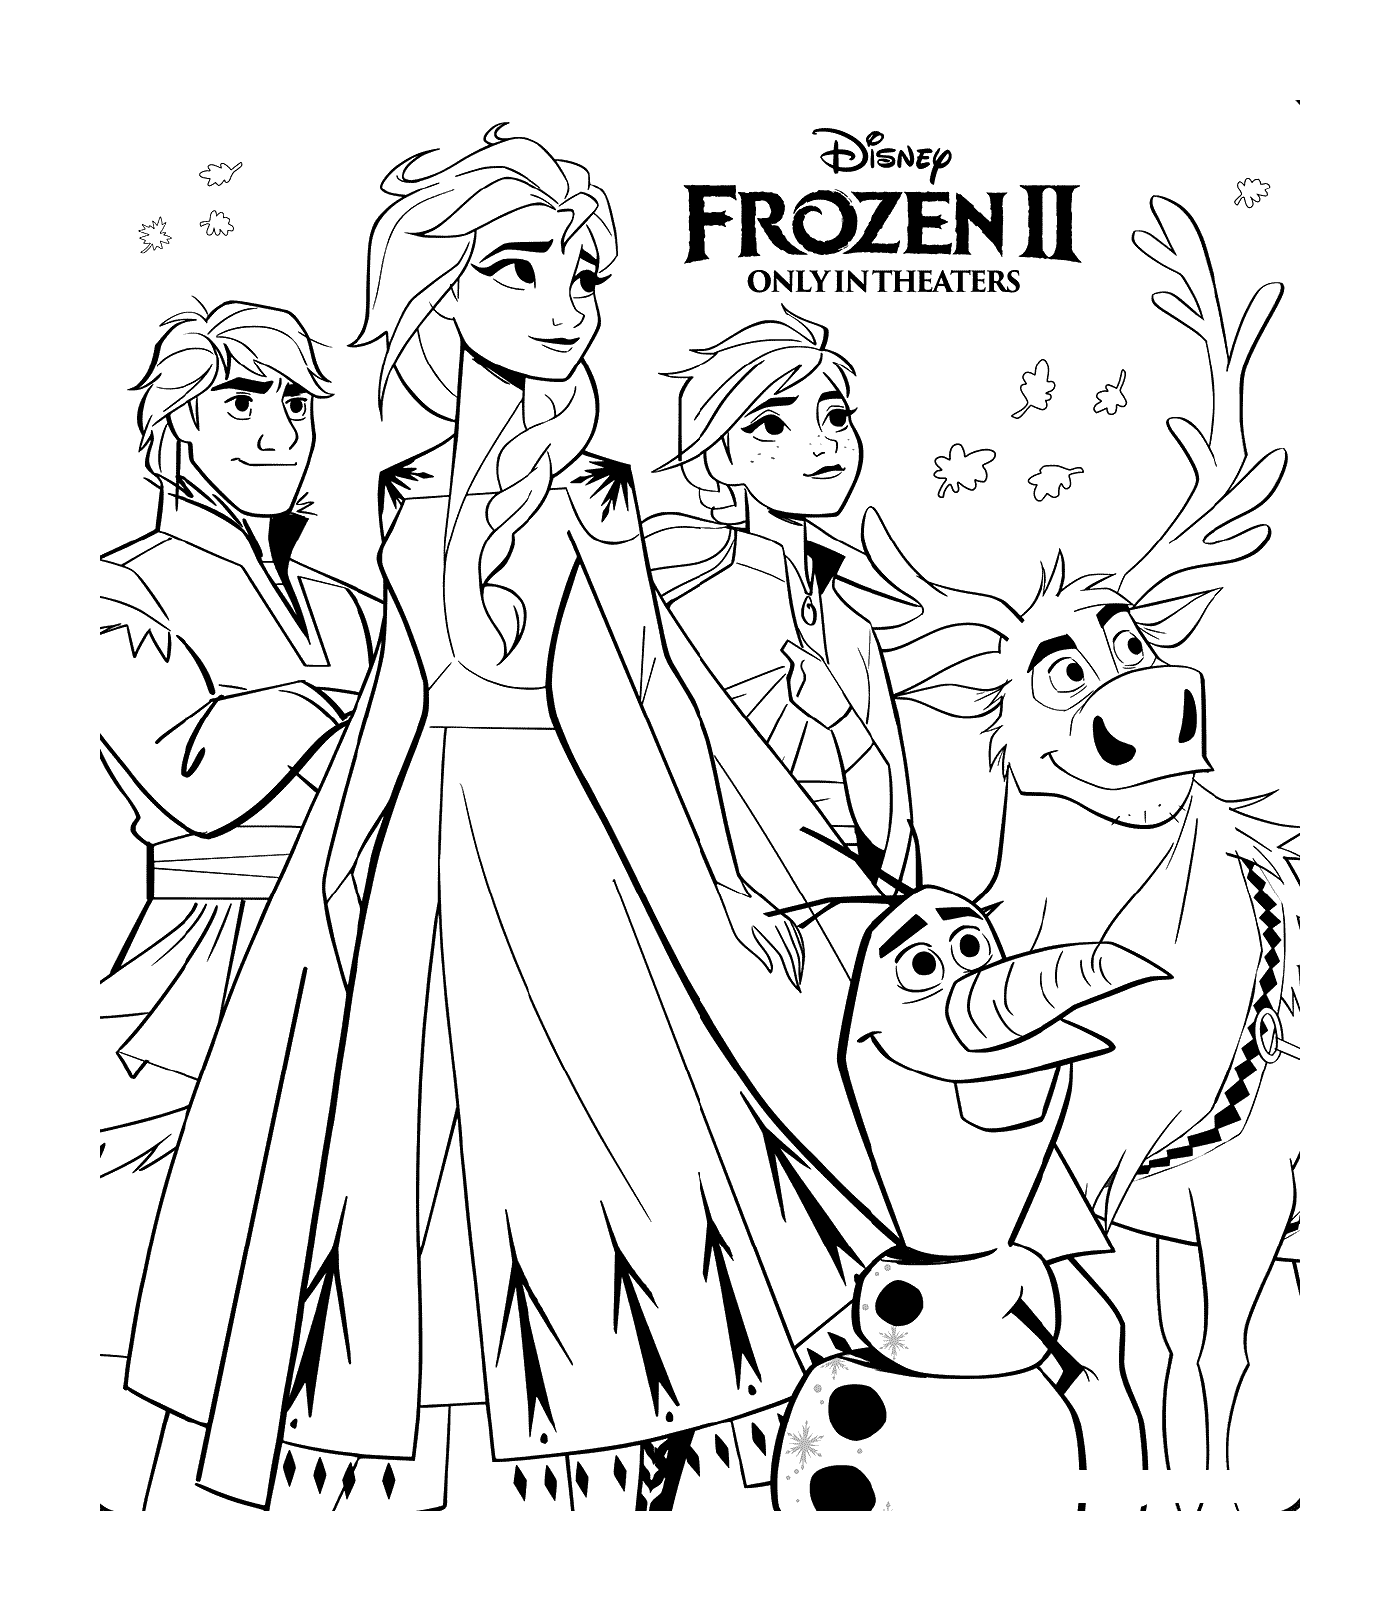  Disney The Snow Queen 2 